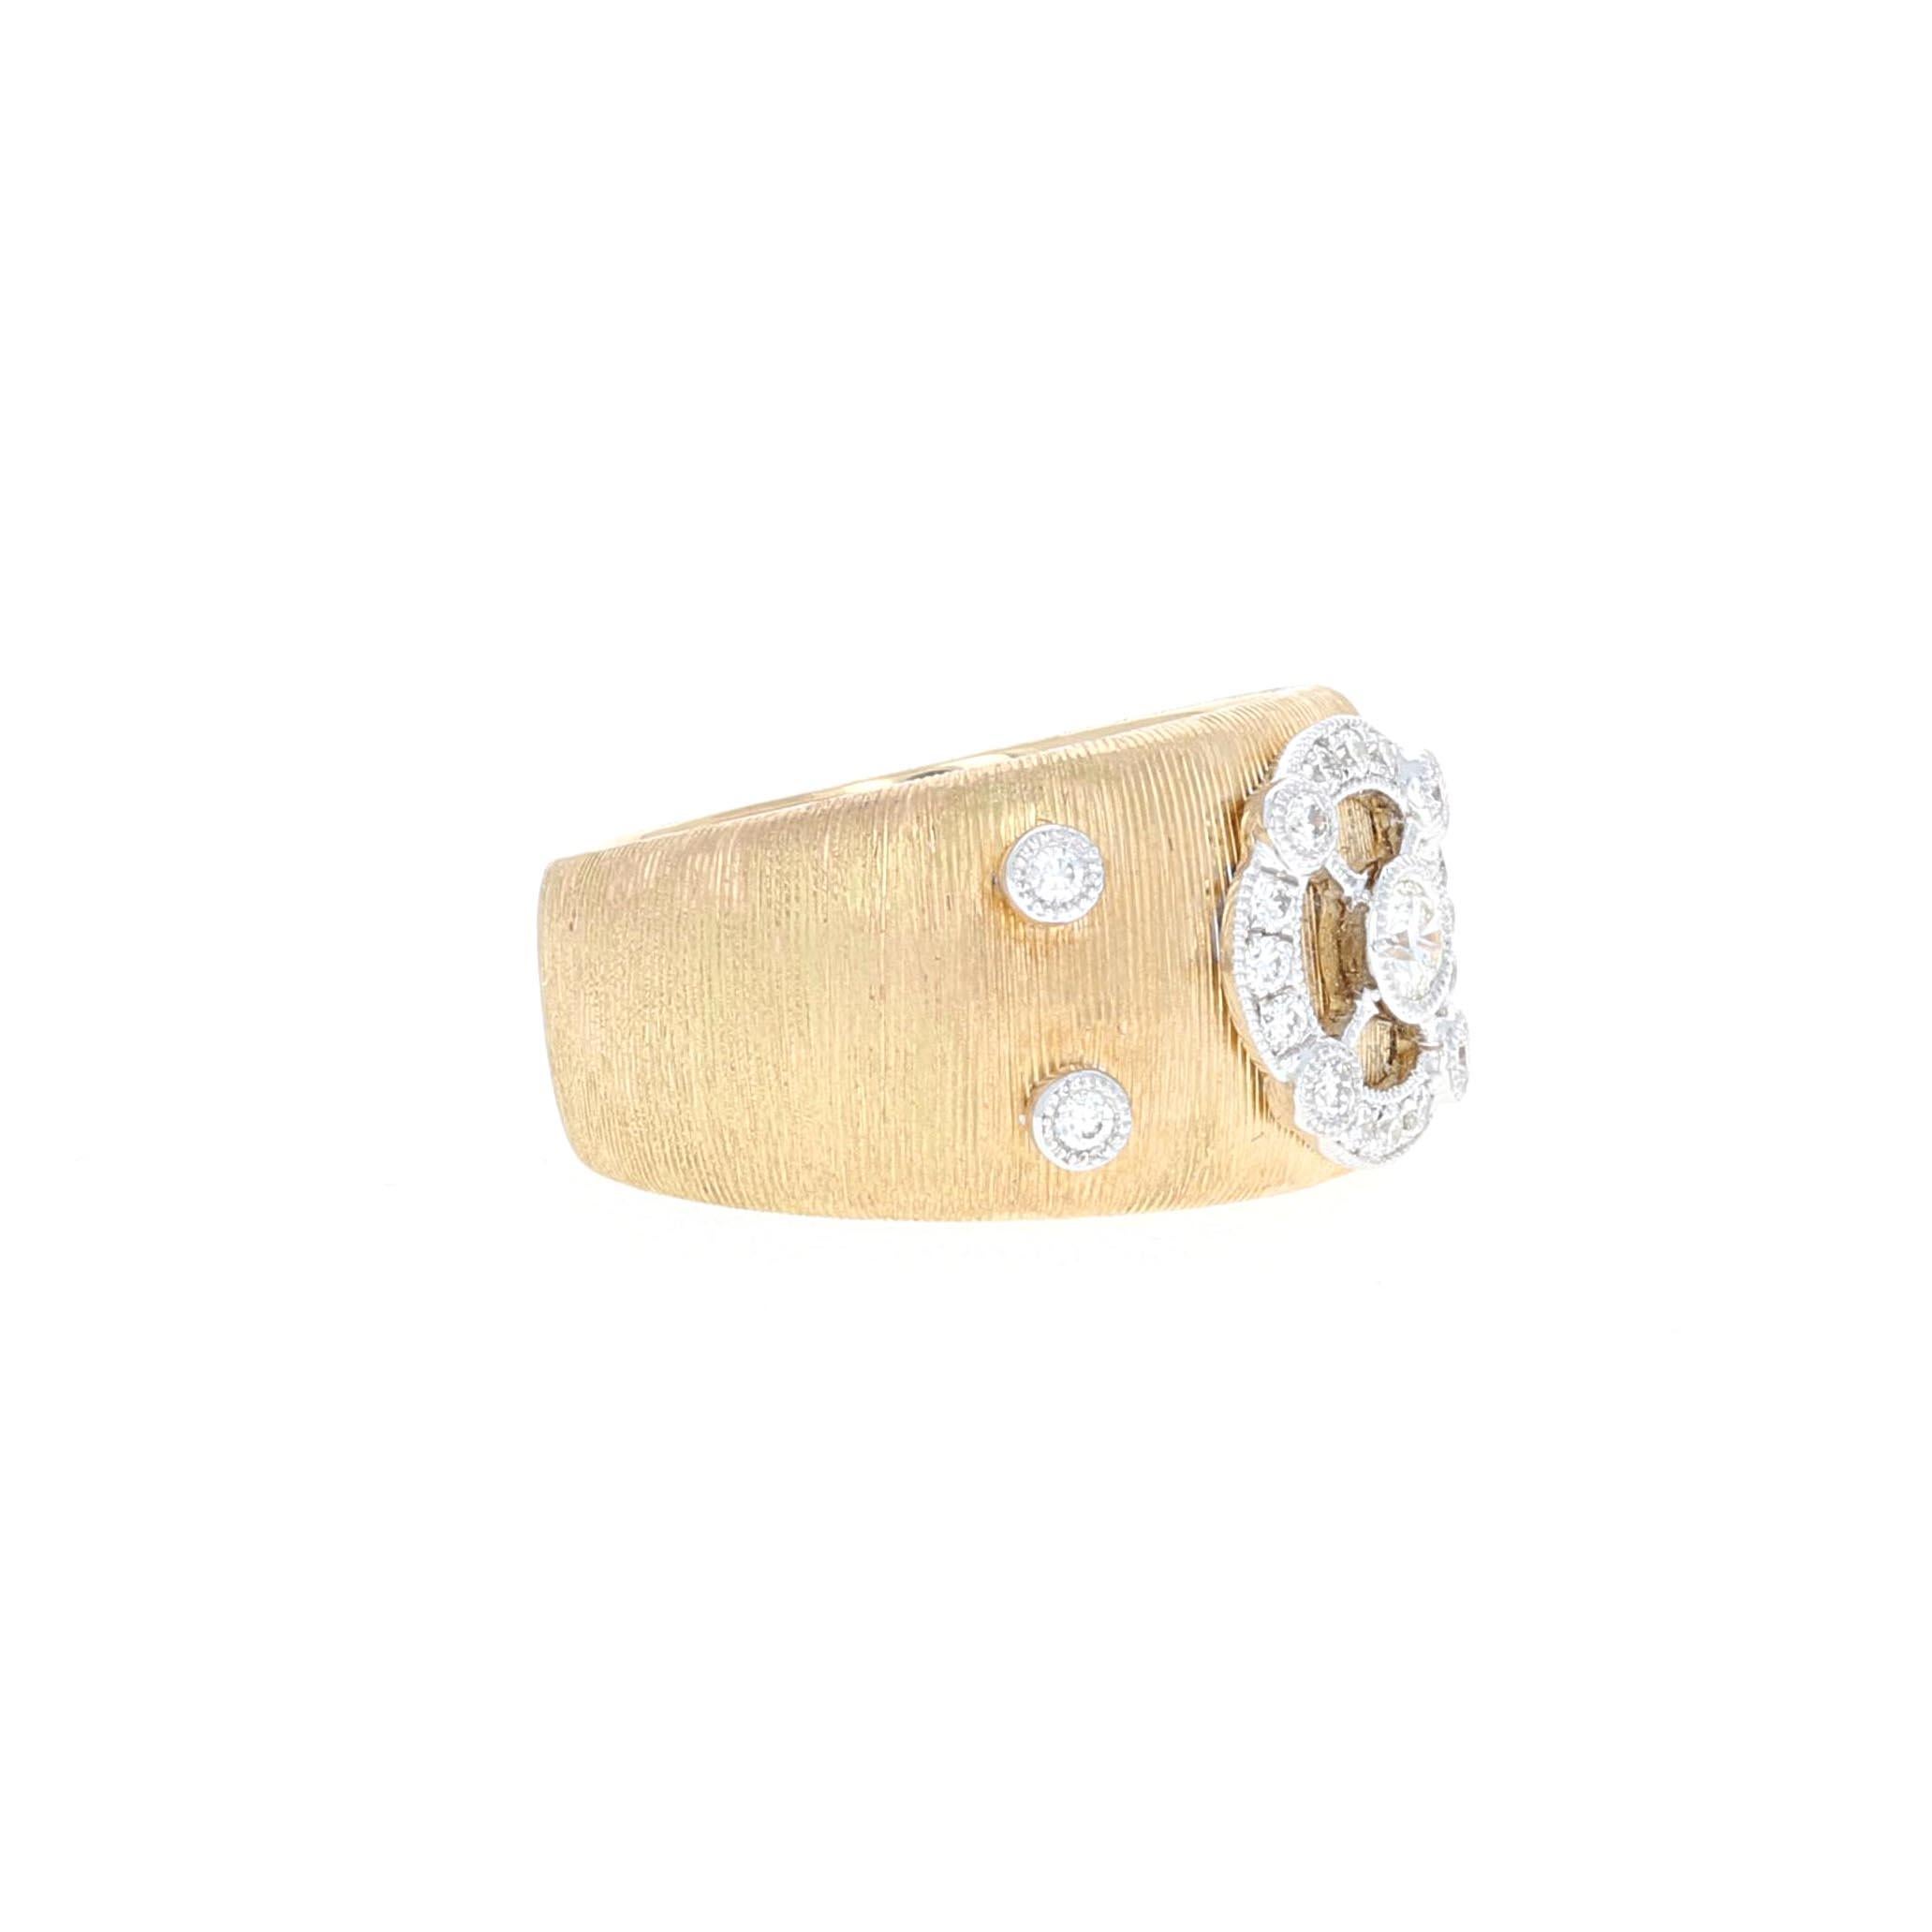 18 karat yellow gold diamond fashion ring. The ring has a 